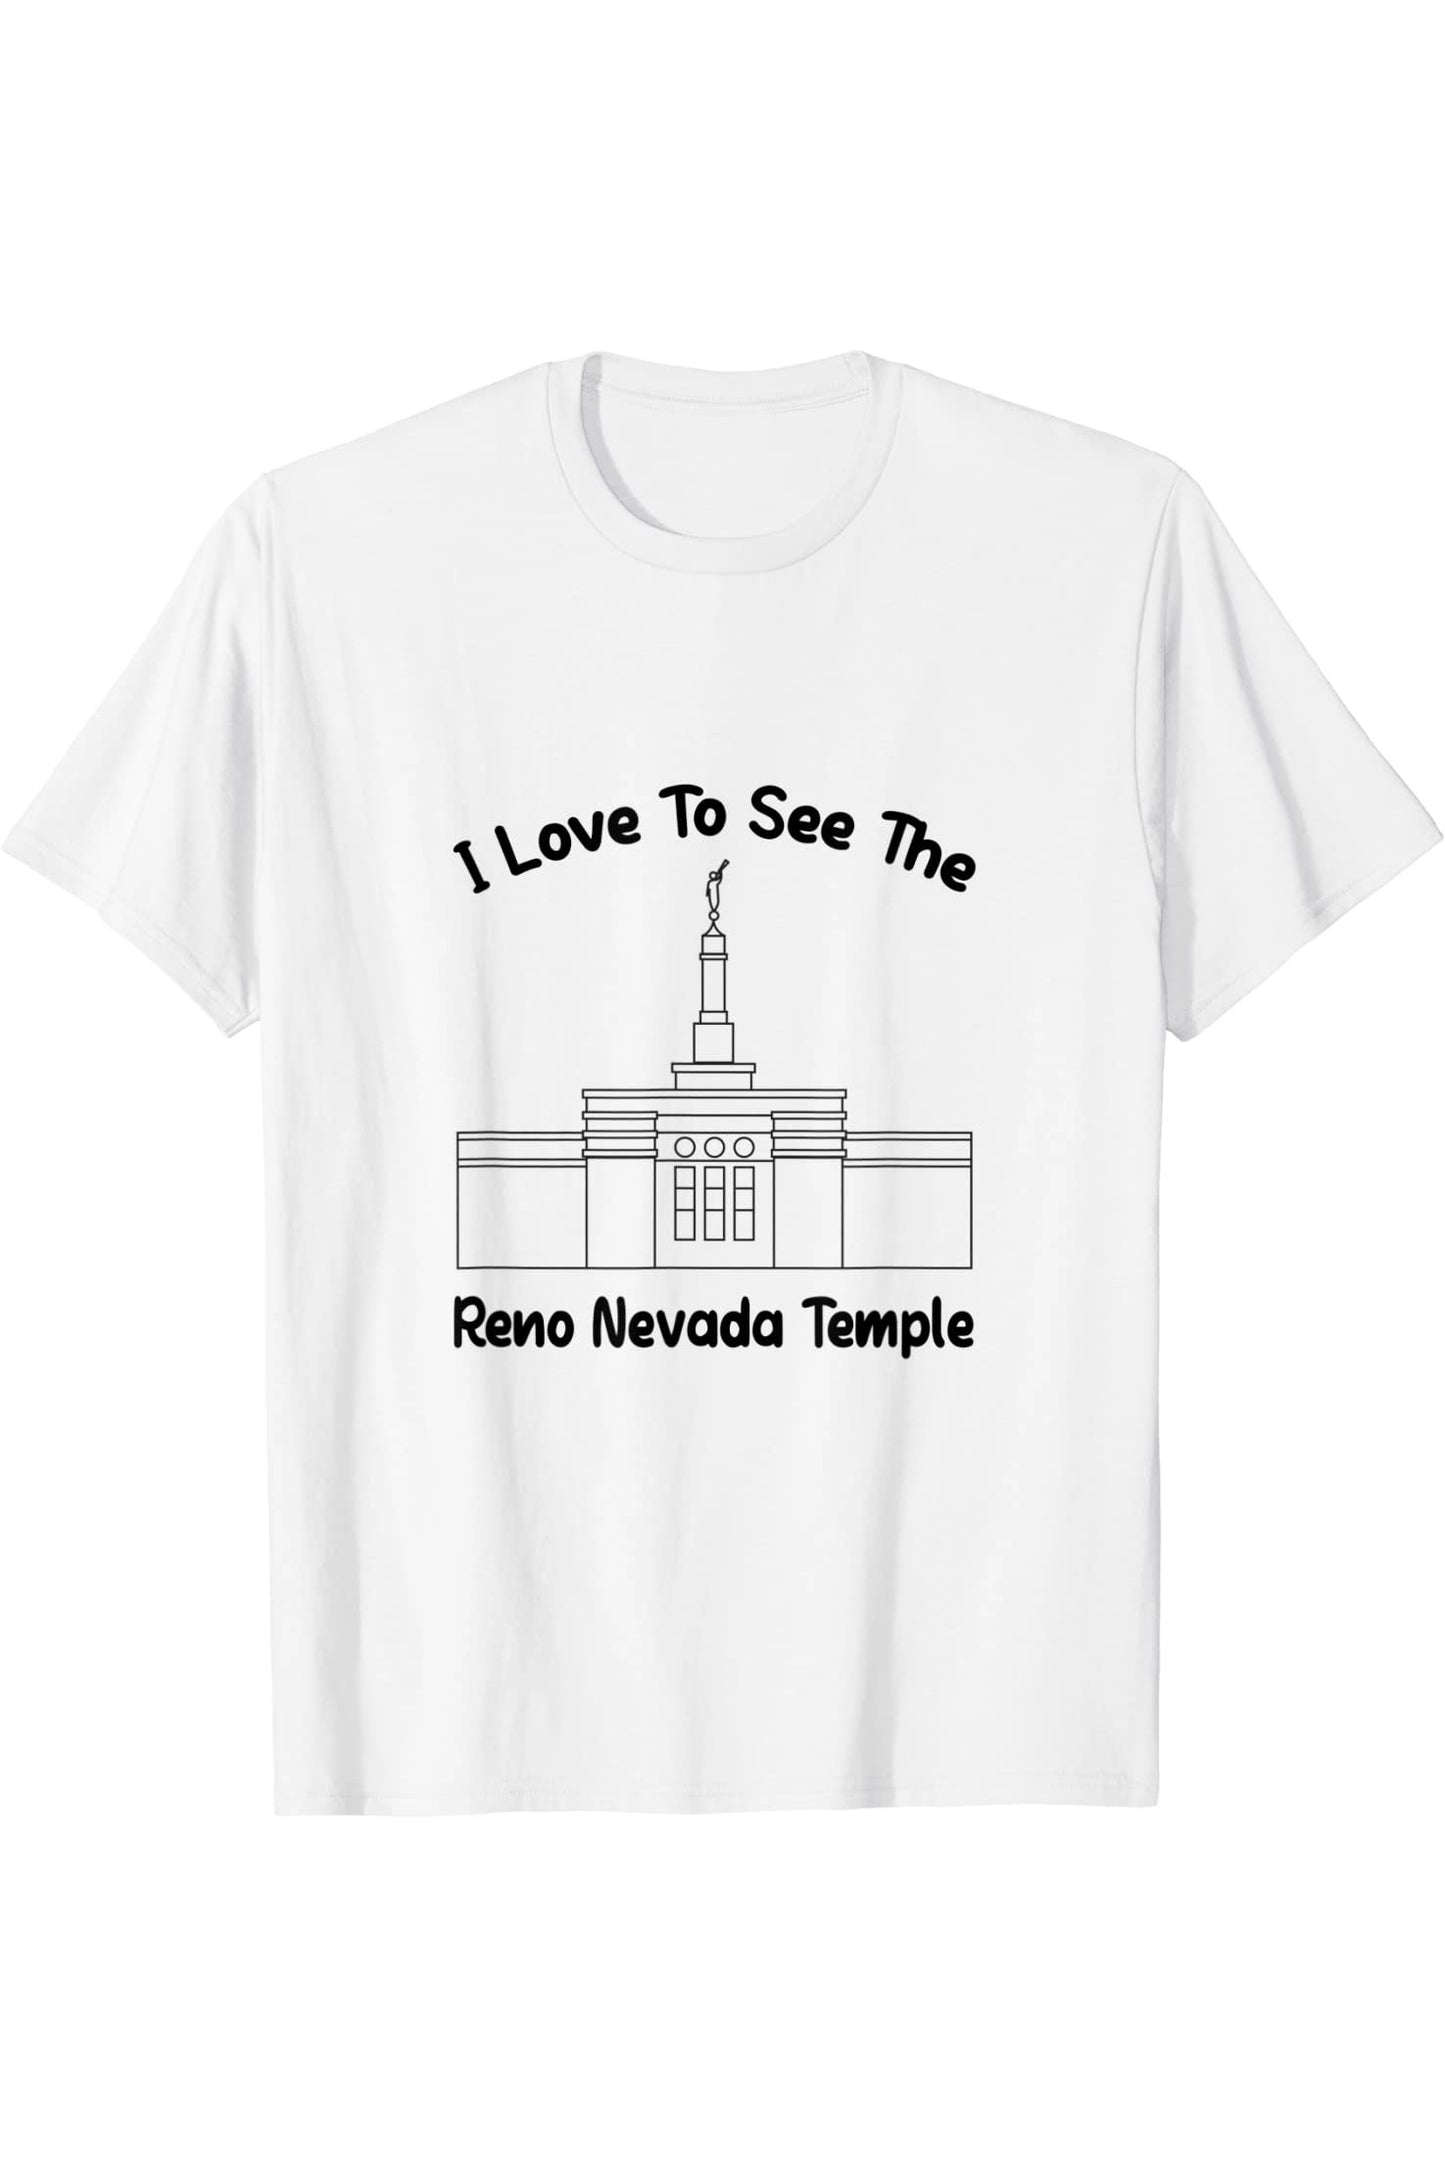 Reno Nevada Temple T-Shirt - Primary Style (English) US